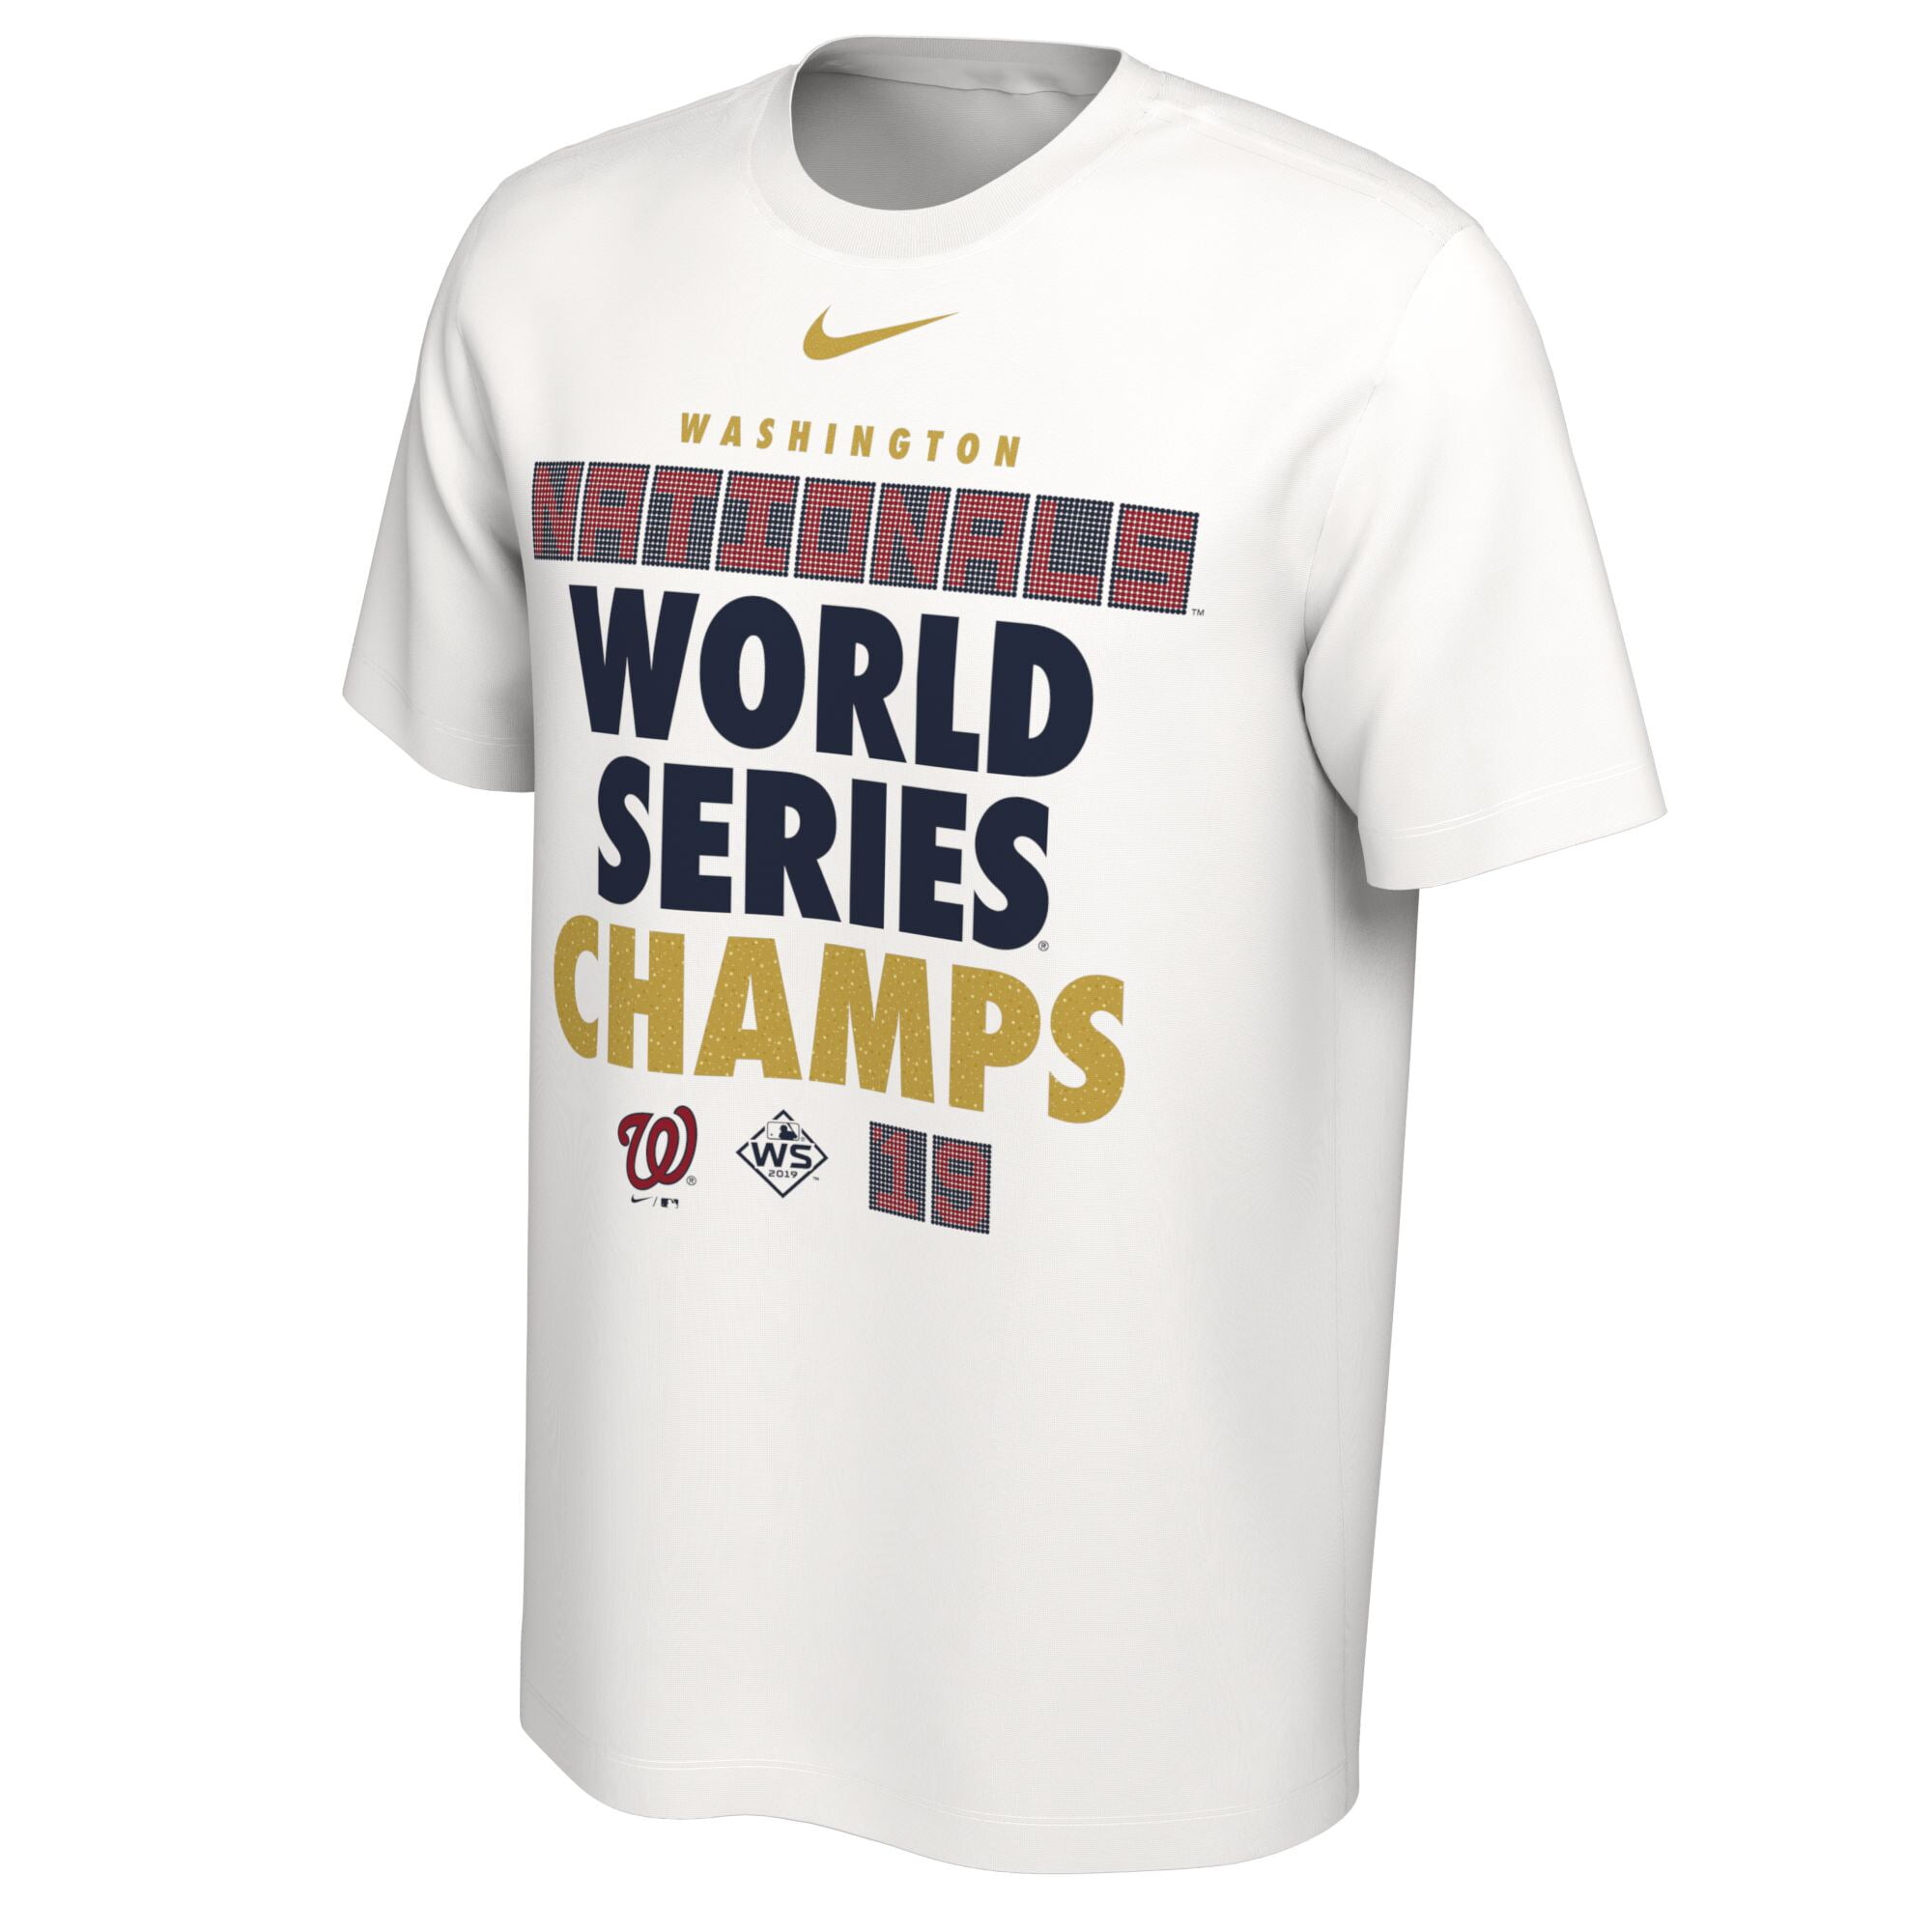 2019 world series shirt